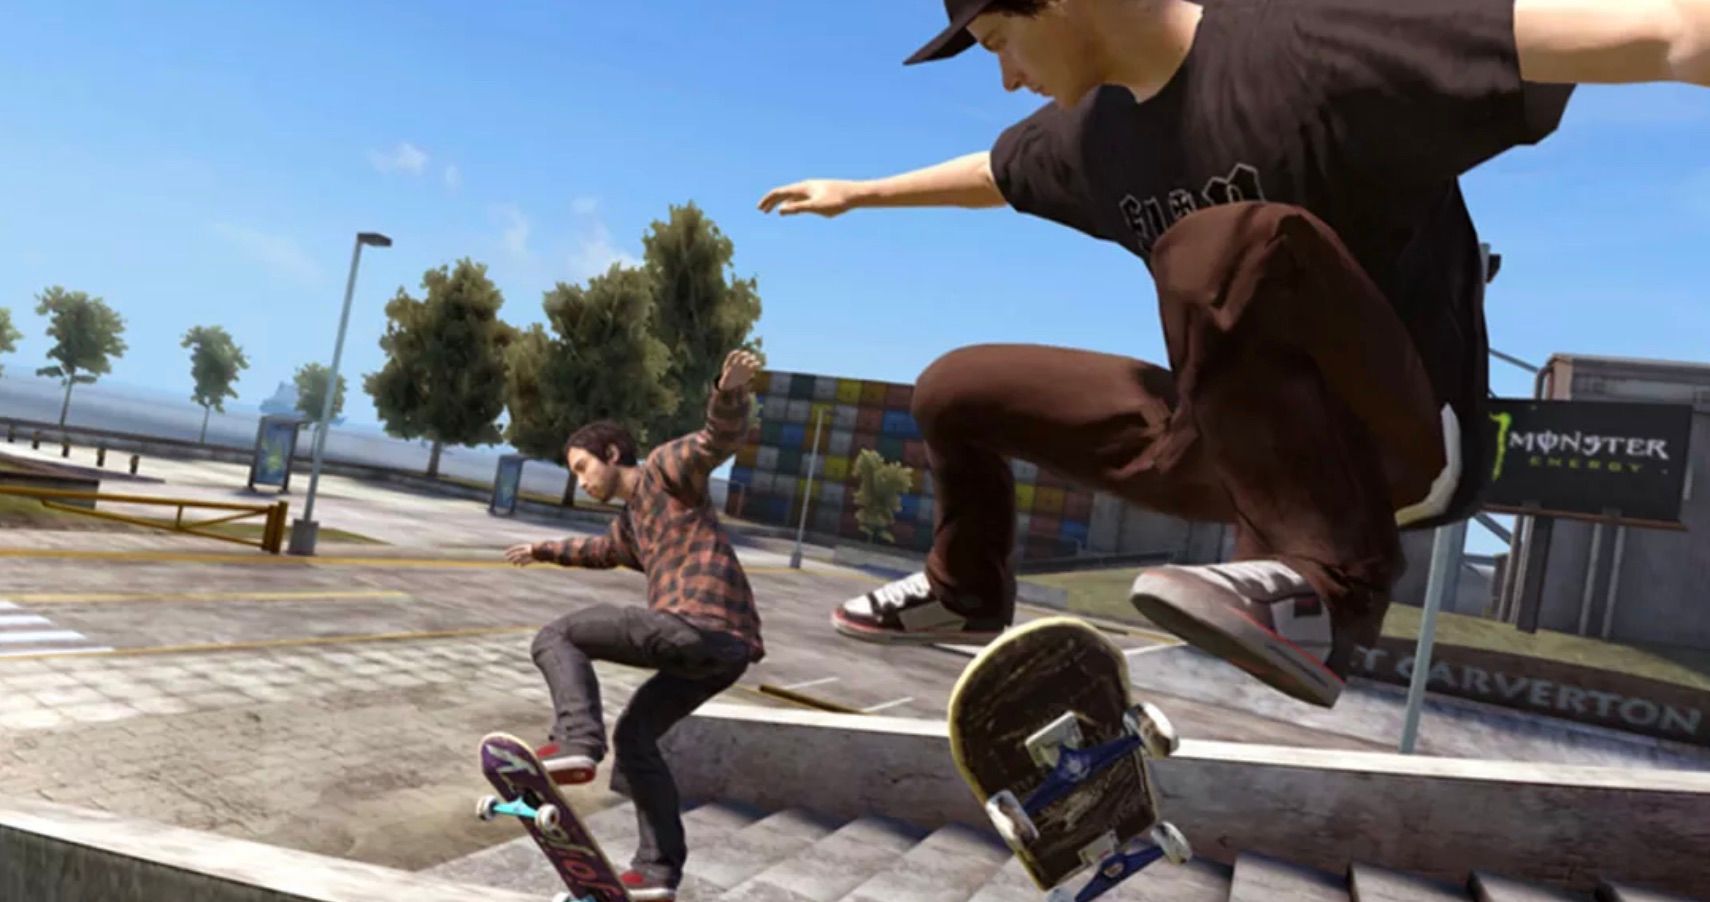 LA Icon Danny Trejo Yells Do A Kickflip! To Skateboarders From A